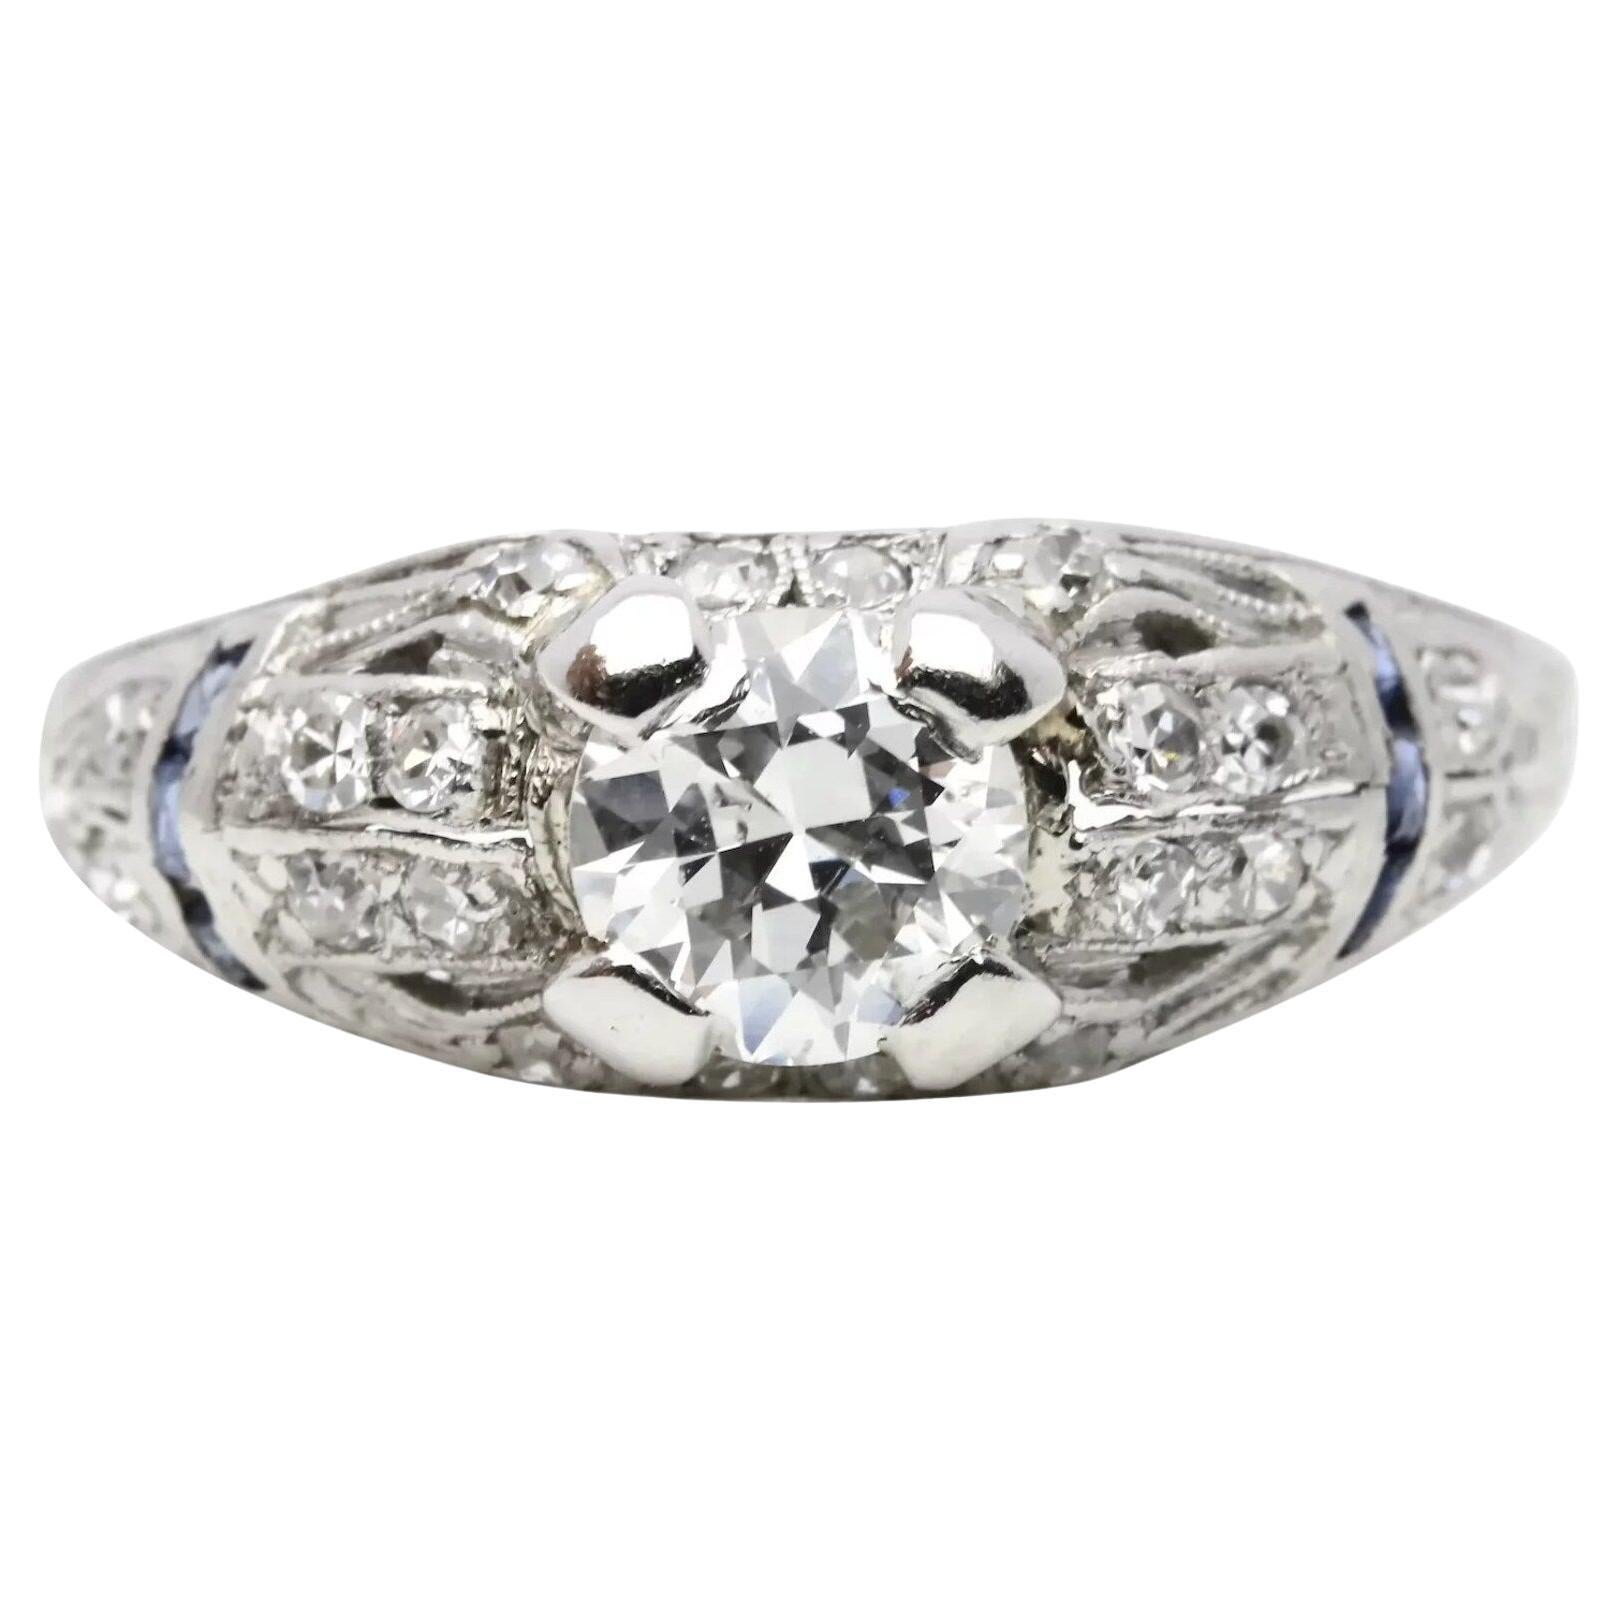 Circa 1920's Art Deco 1.15ctw Diamond & Sapphire Engagement Ring in Platinum For Sale